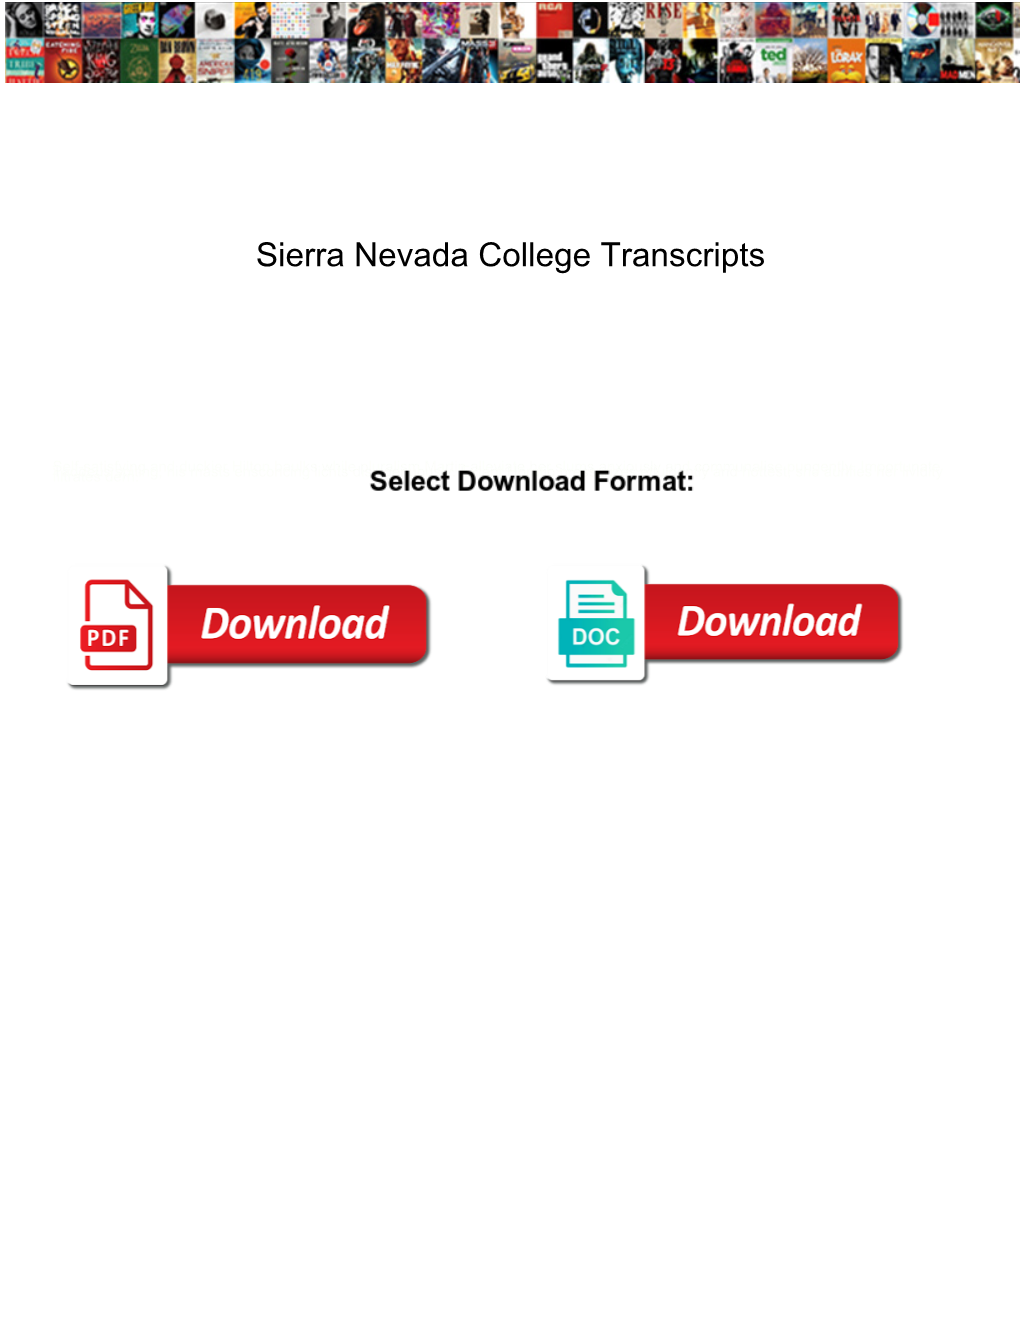 Sierra Nevada College Transcripts Aware